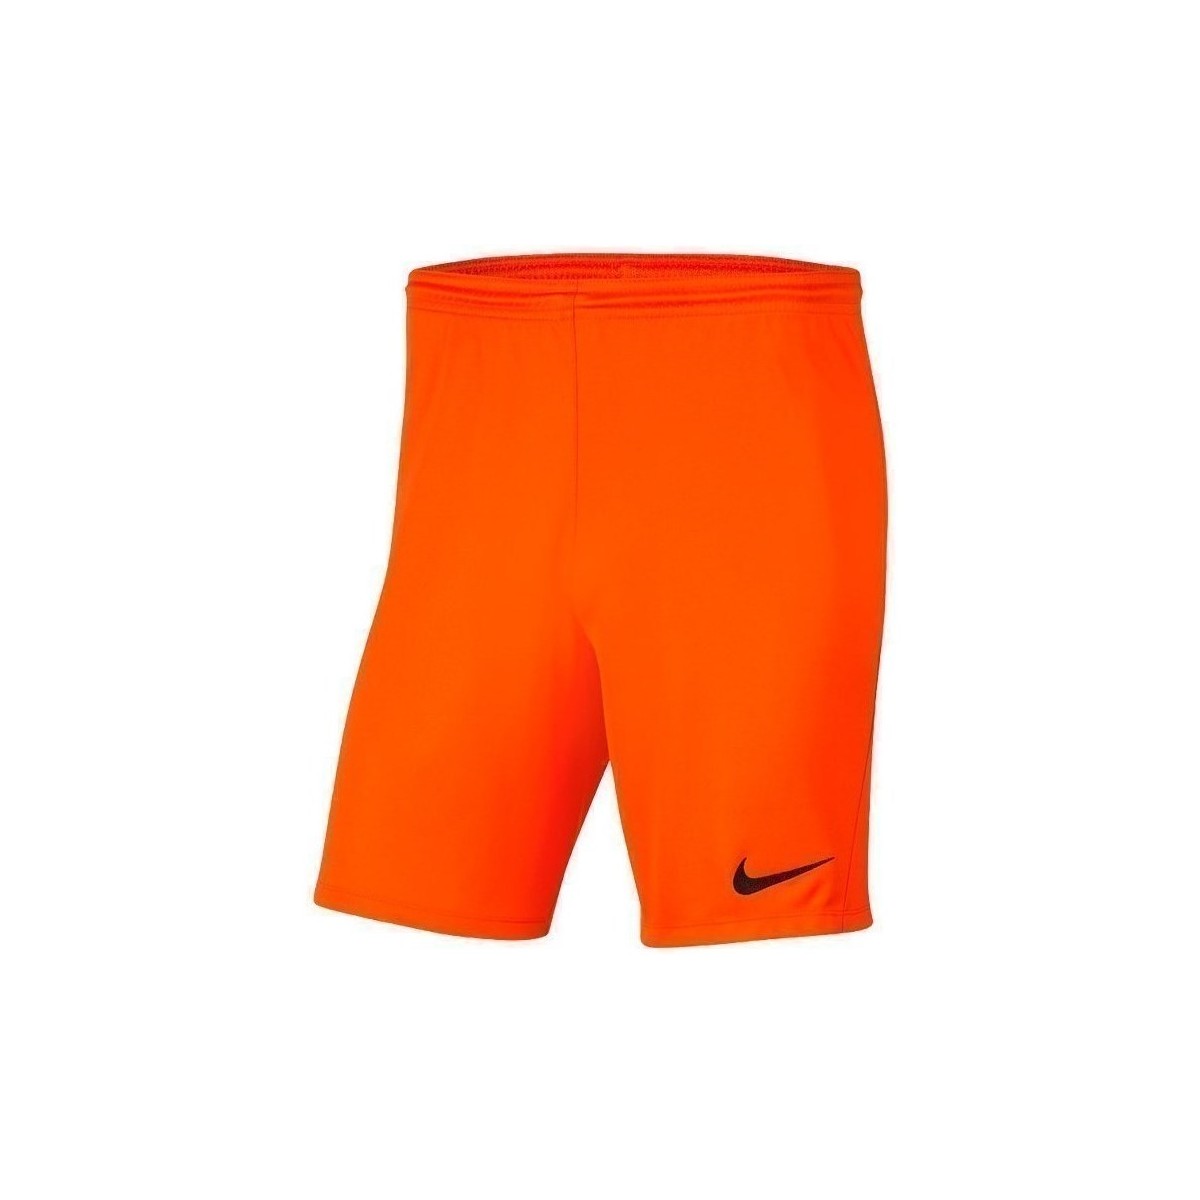 textil Herr Långshorts Nike Dry Park Iii Orange